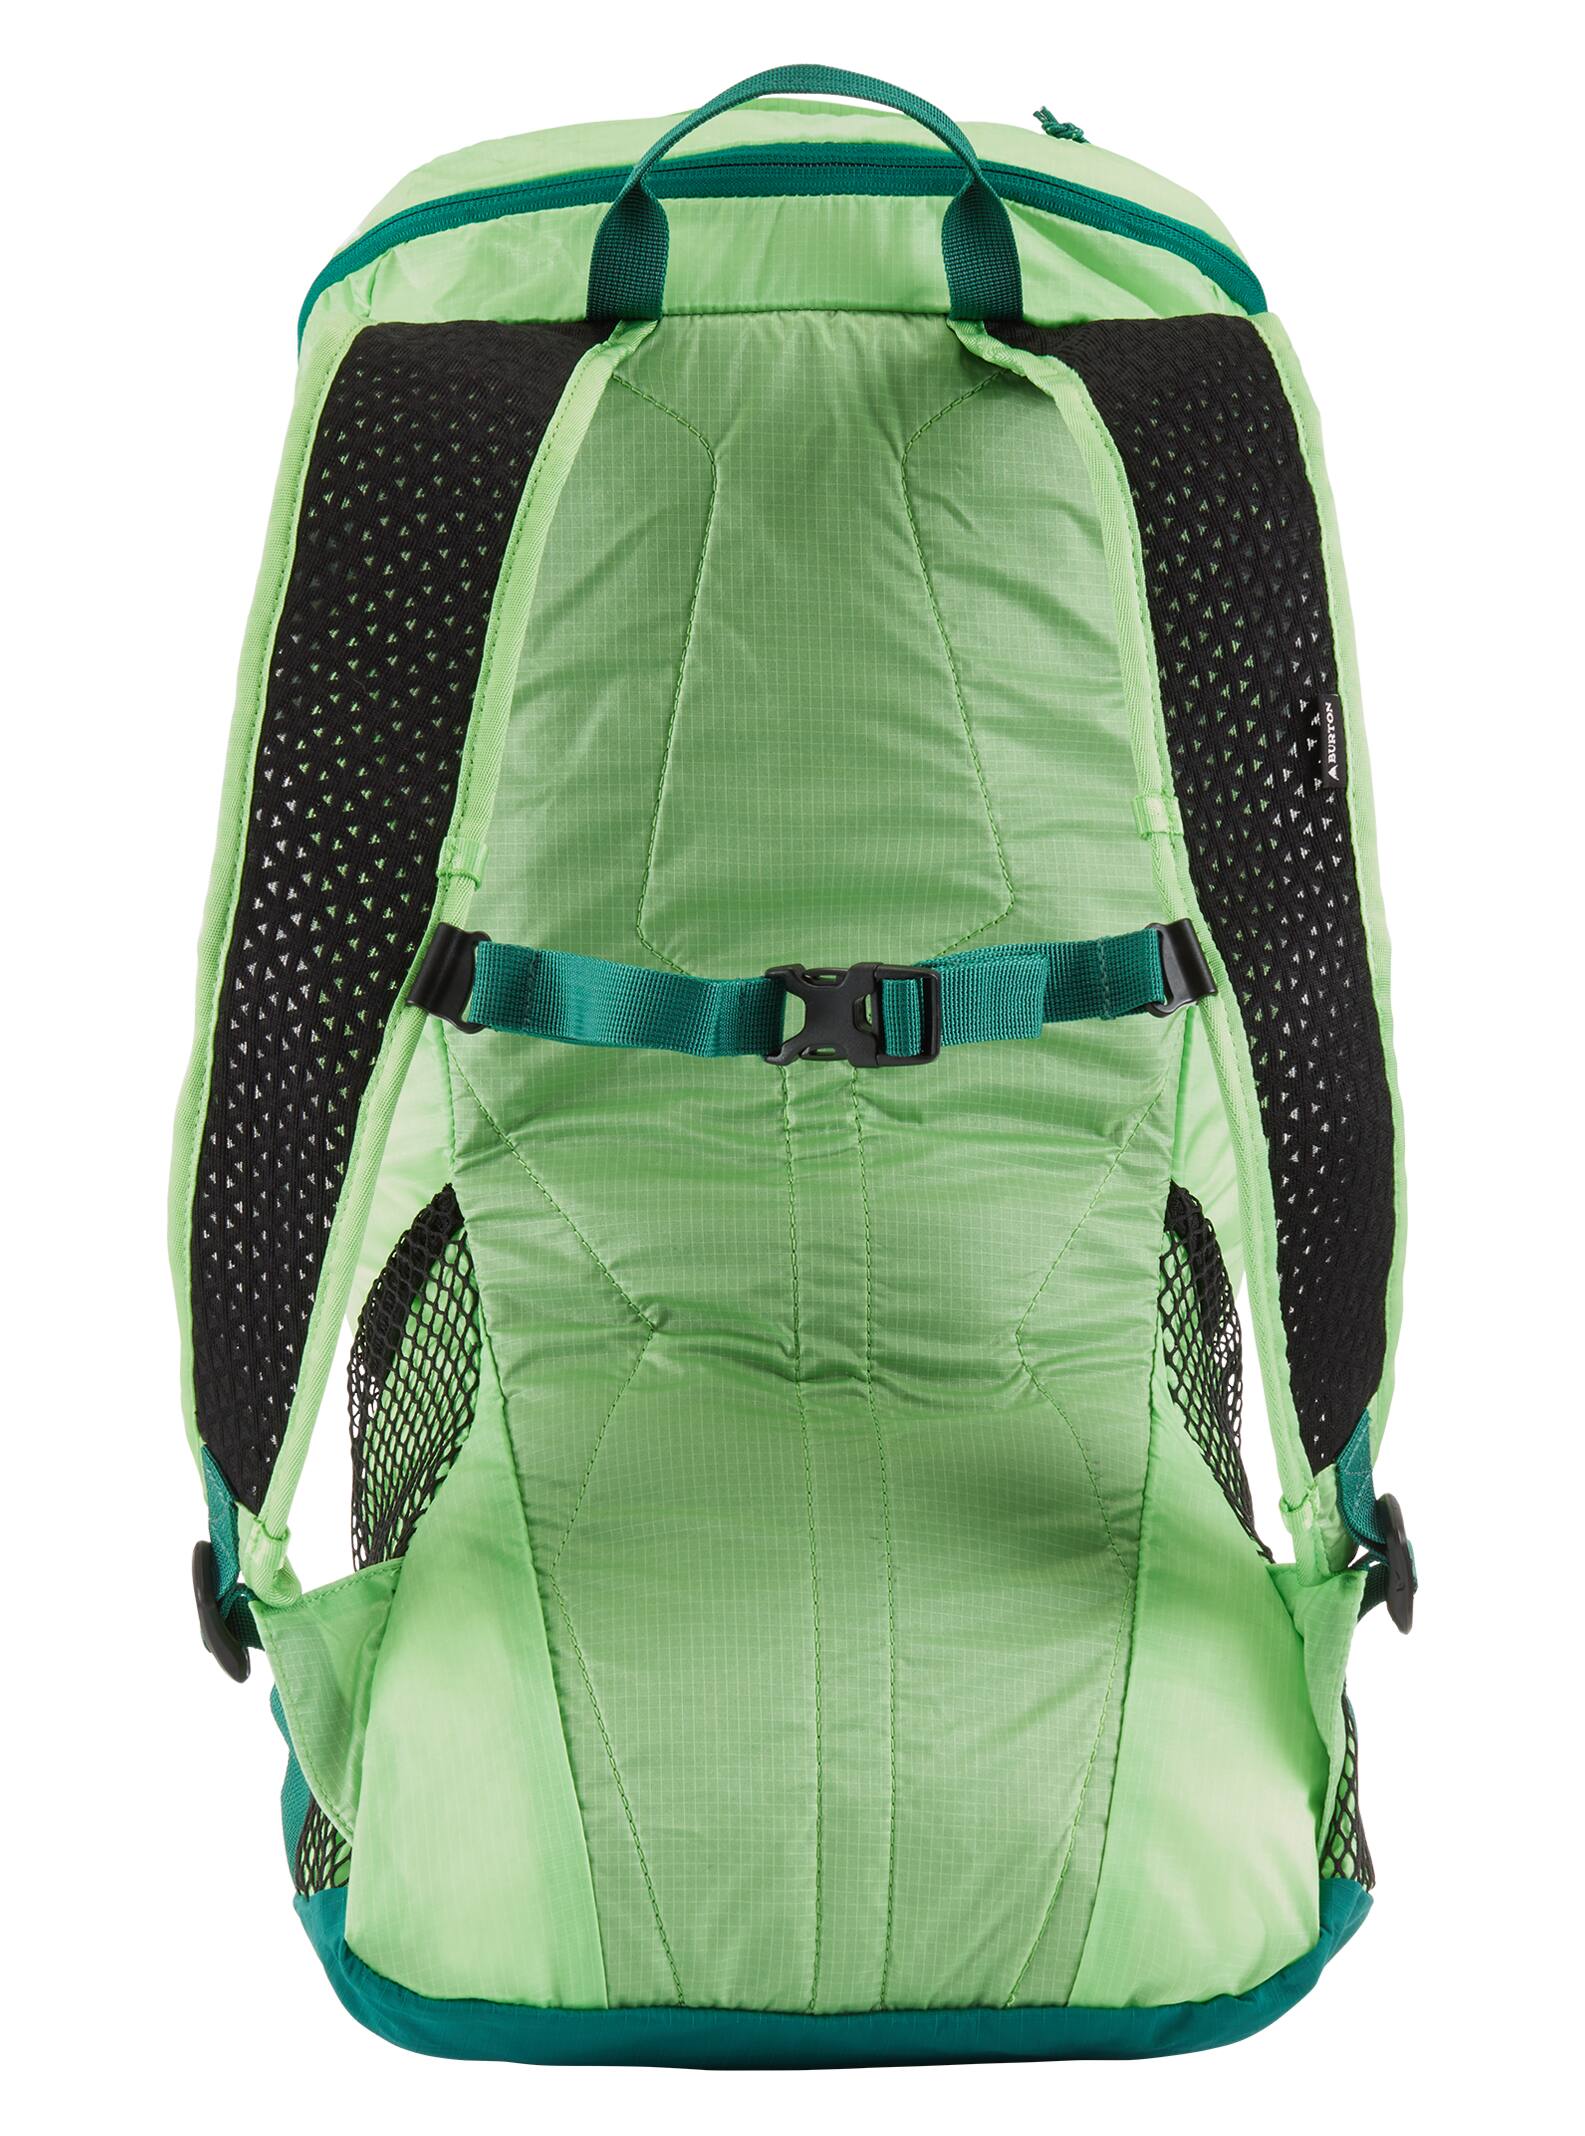 Burton Skyward 25L Packable Backpack | Burton.com Spring 2021 US